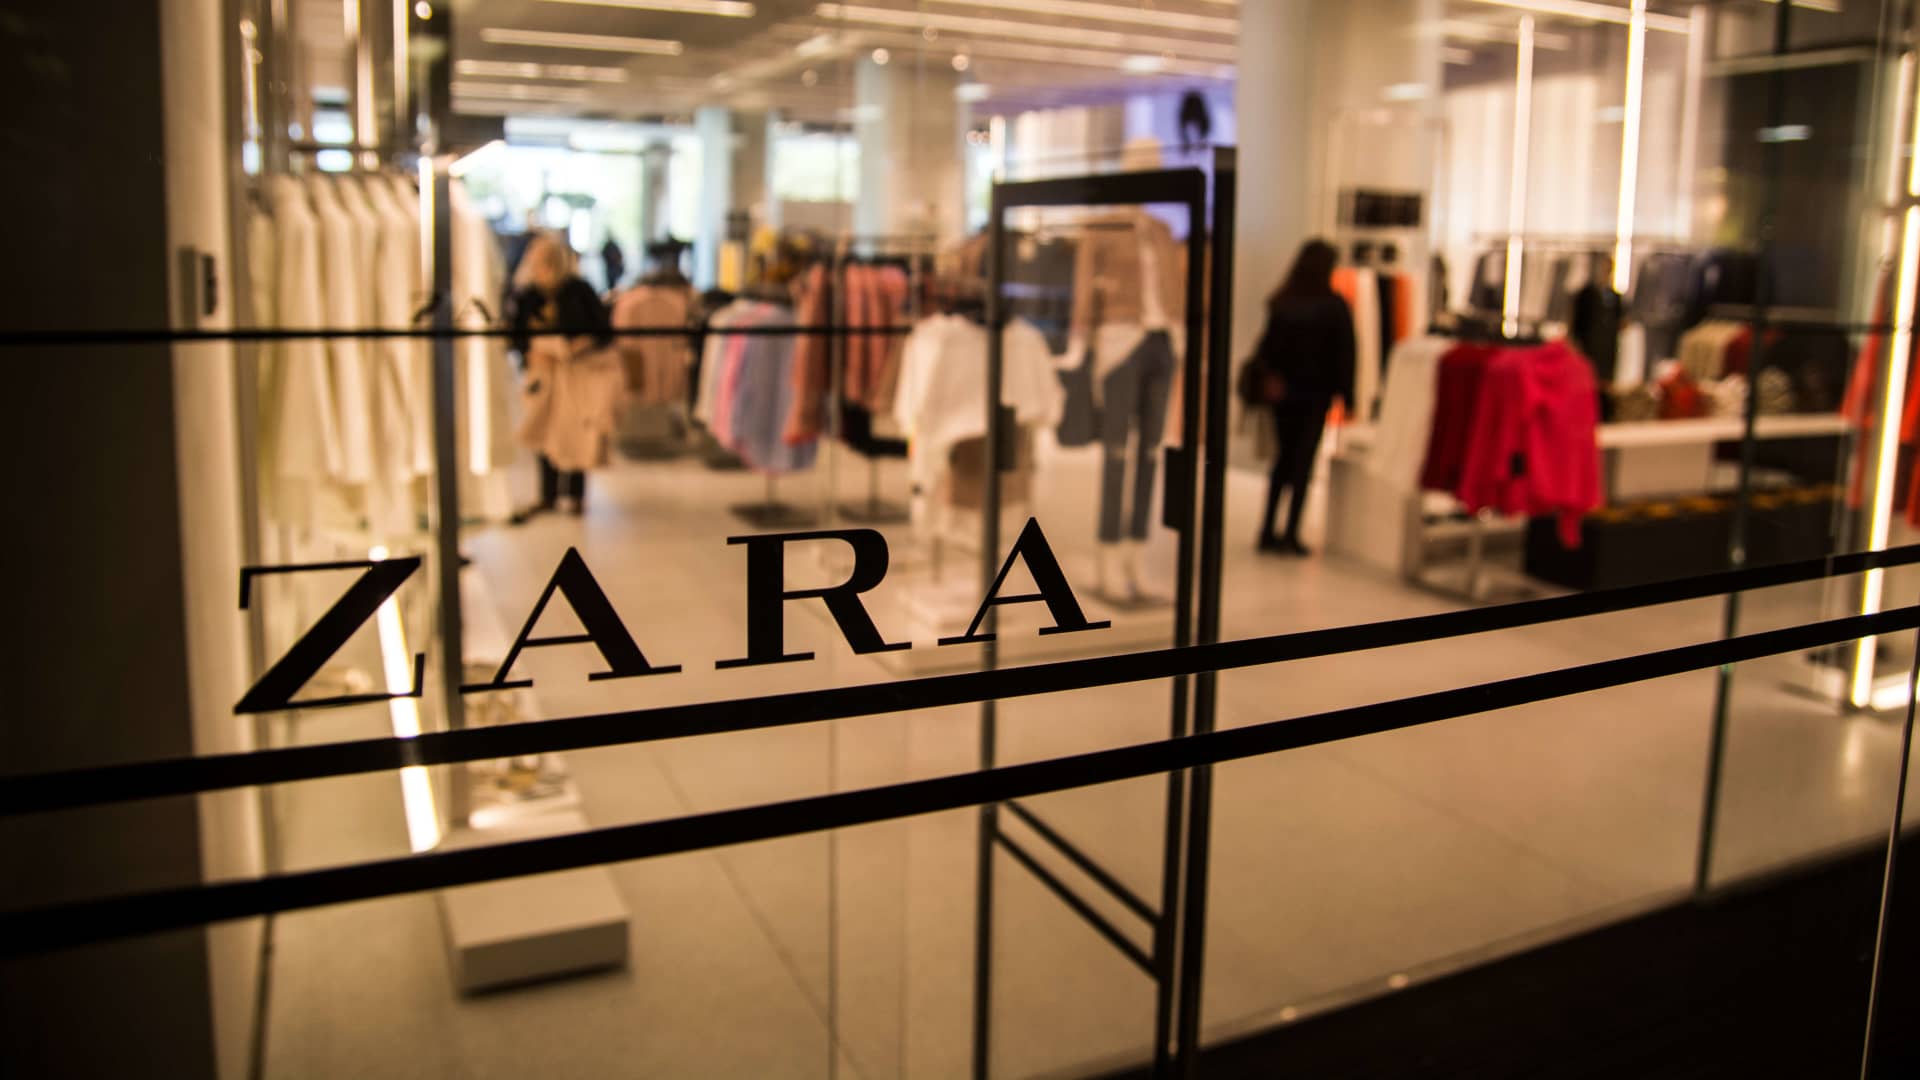 Fashion brand Zara pulls advertisement accused of Gaza insensitivity, states it regrets &#x27misunderstanding&#x27